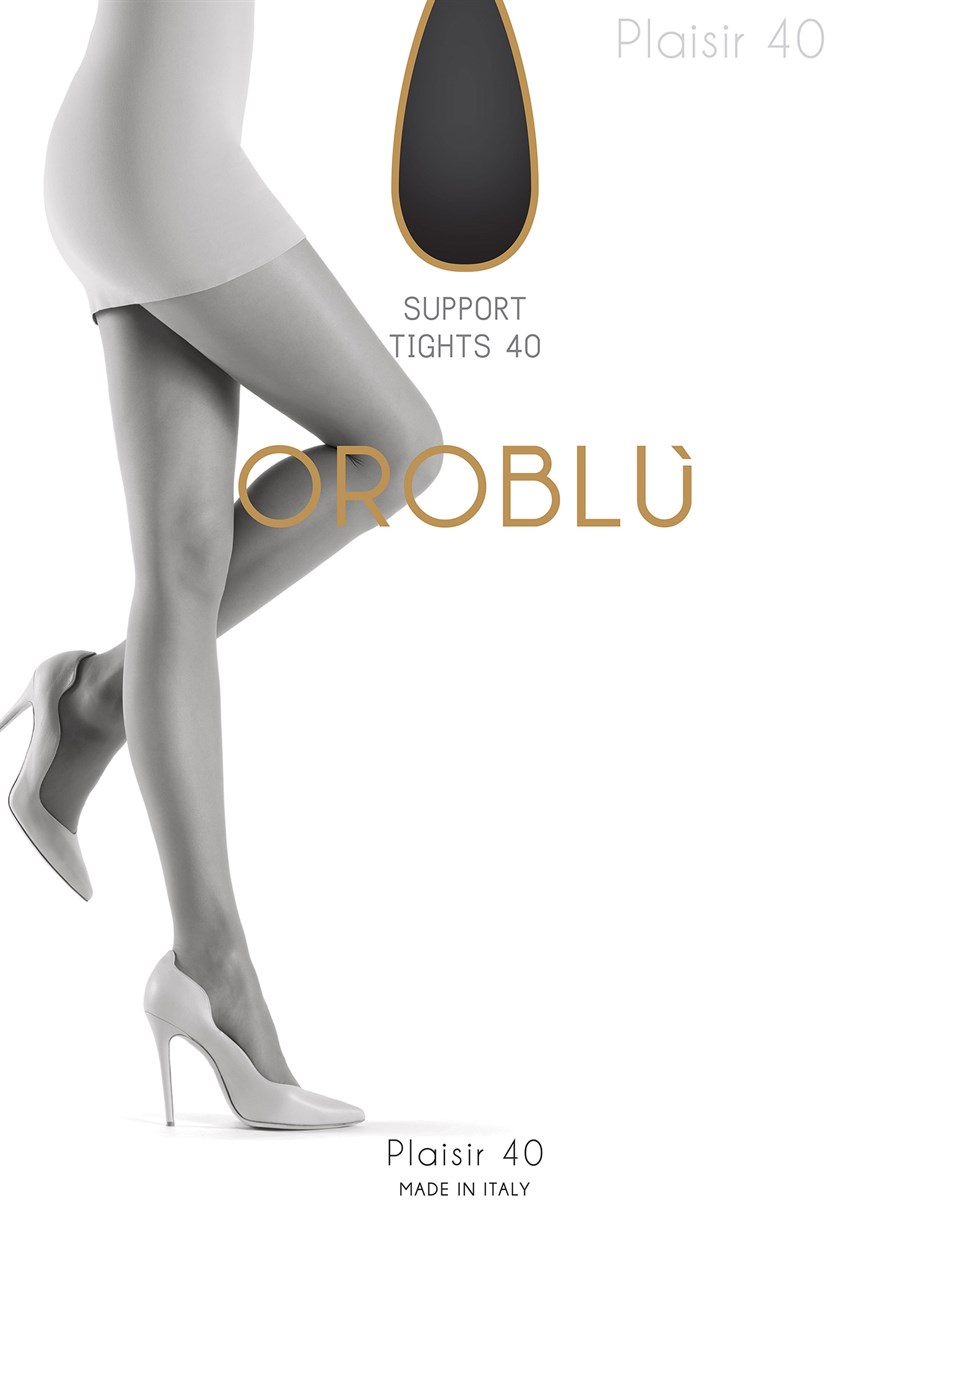 Main product image for Oroblu Plaisir 40d Singapour 42-44